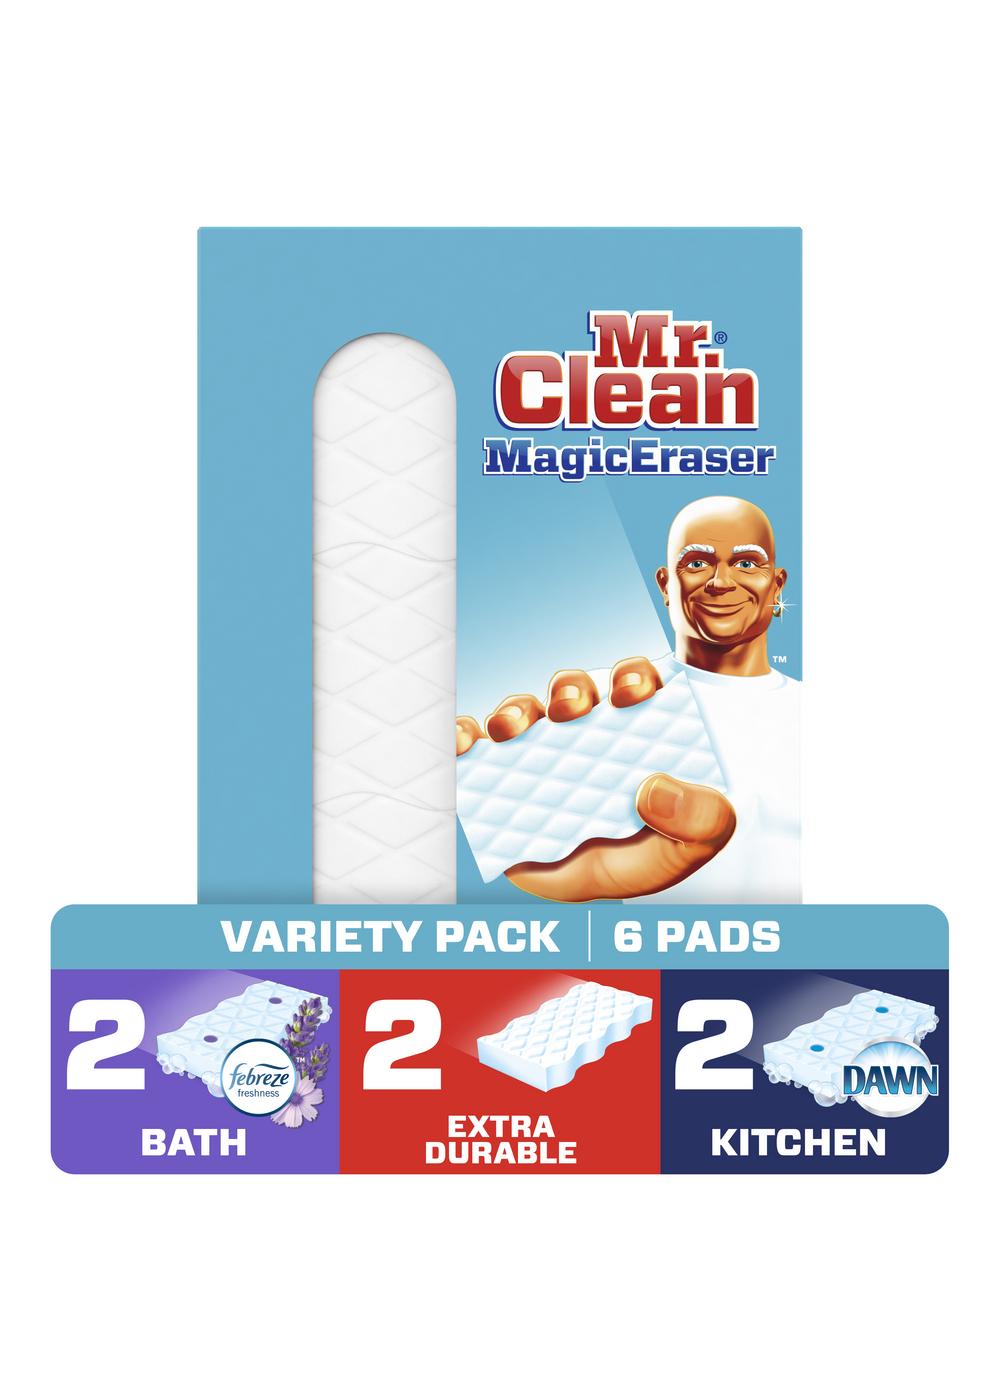 Mr. Clean Magic Eraser Extra Durable Reviews